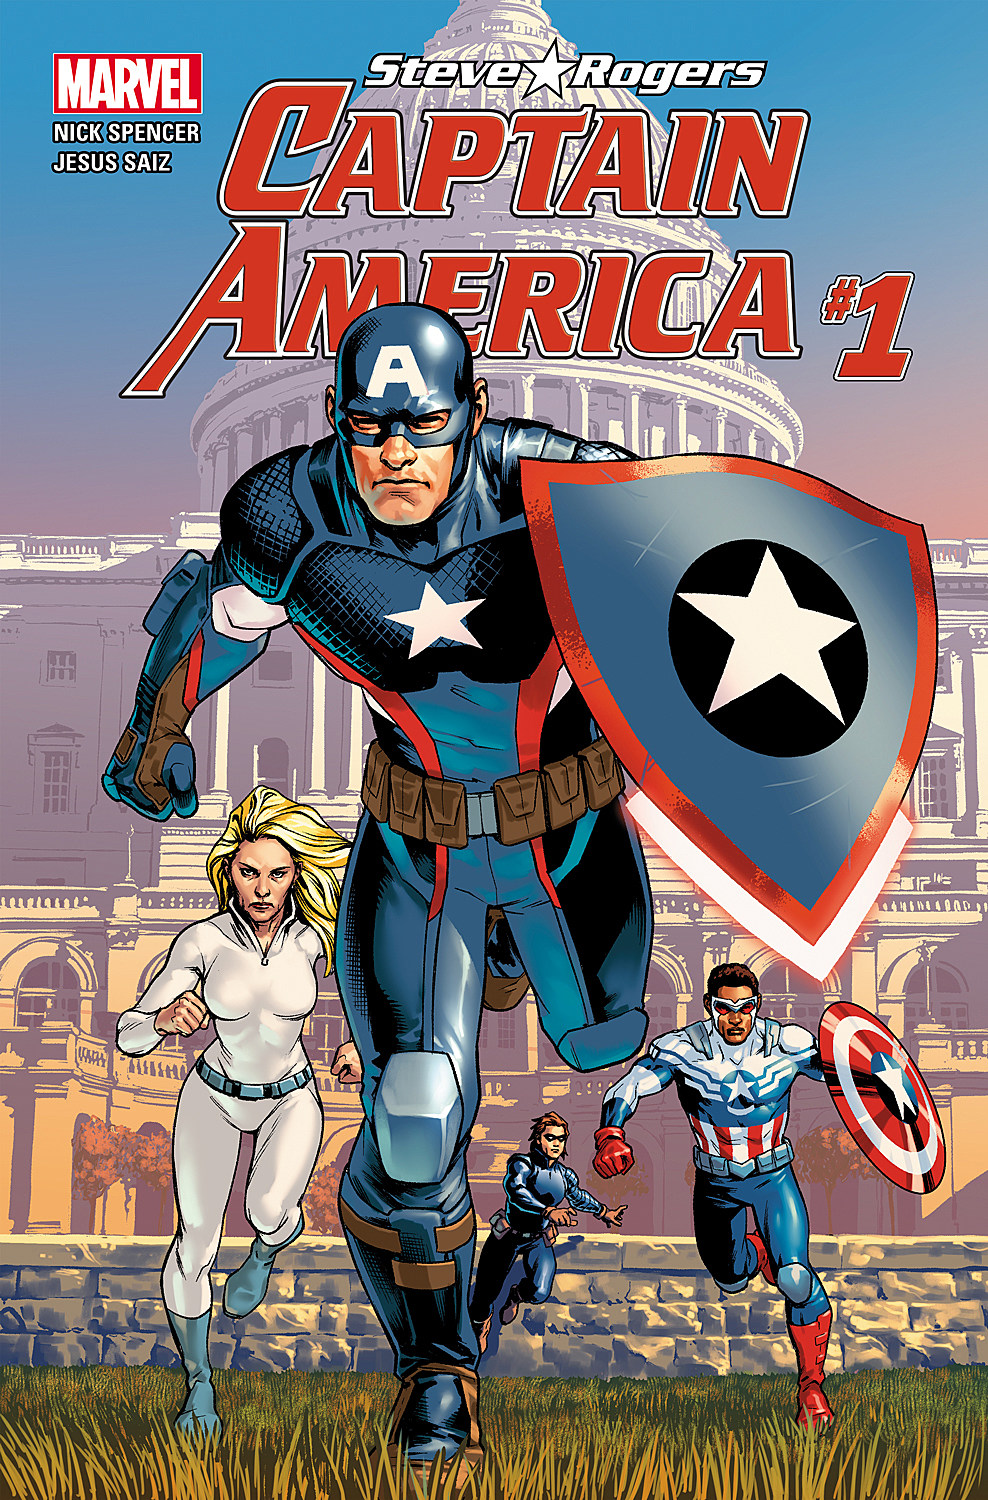  Announces the Unsurprising Return of Steve Rogers as Captain America